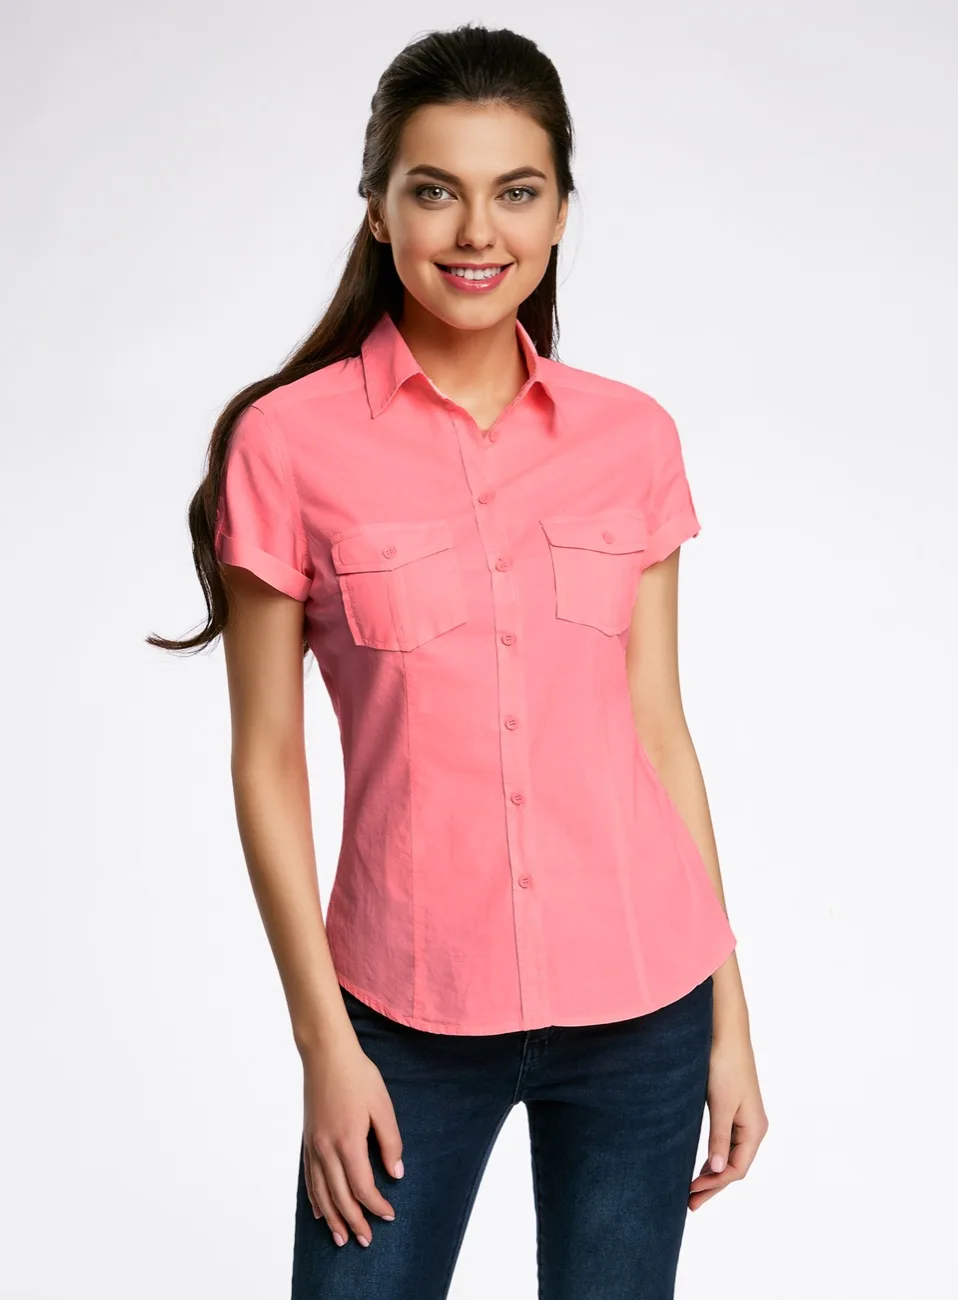 Недорогие блузки интернете. Рубашка женская. Блуза с коротким рукавом. Рубашка с коротким рукавом женская. Розовая рубашка женская.